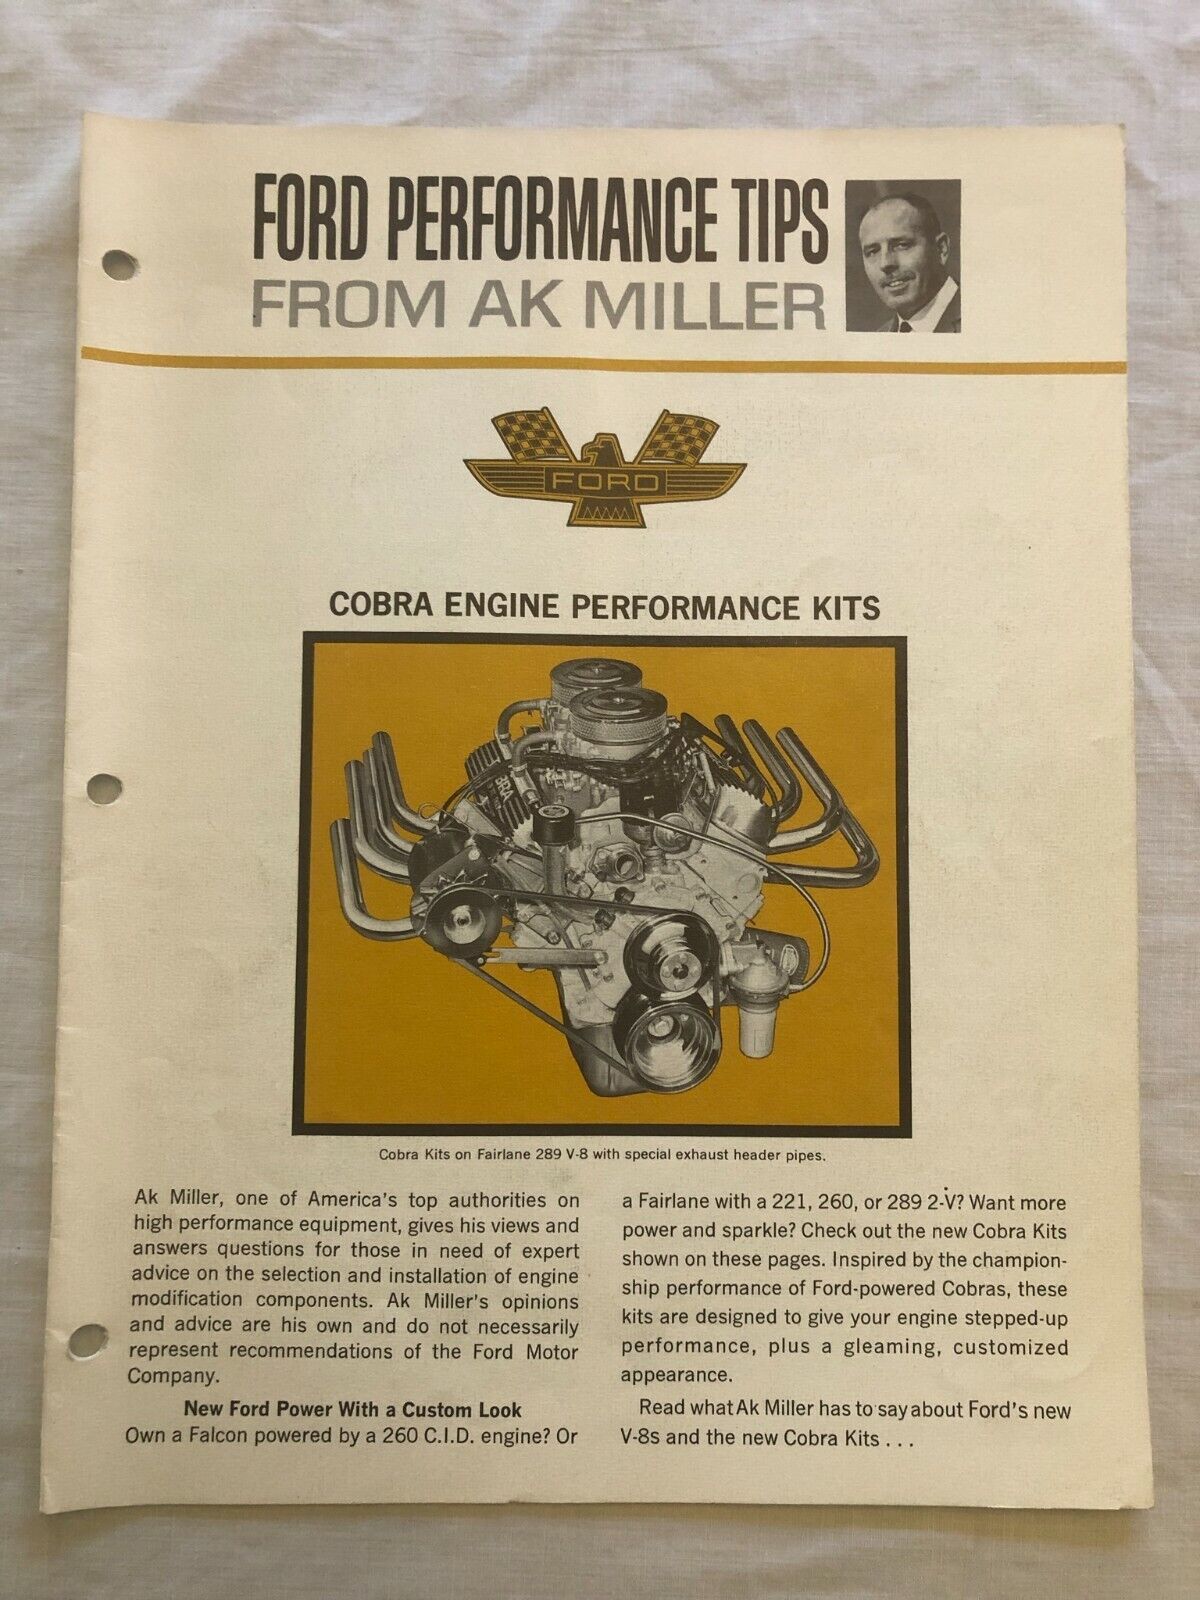 1964 Ford Performance Tips Cobra Engine Kits - AK Miller Carroll Shelby